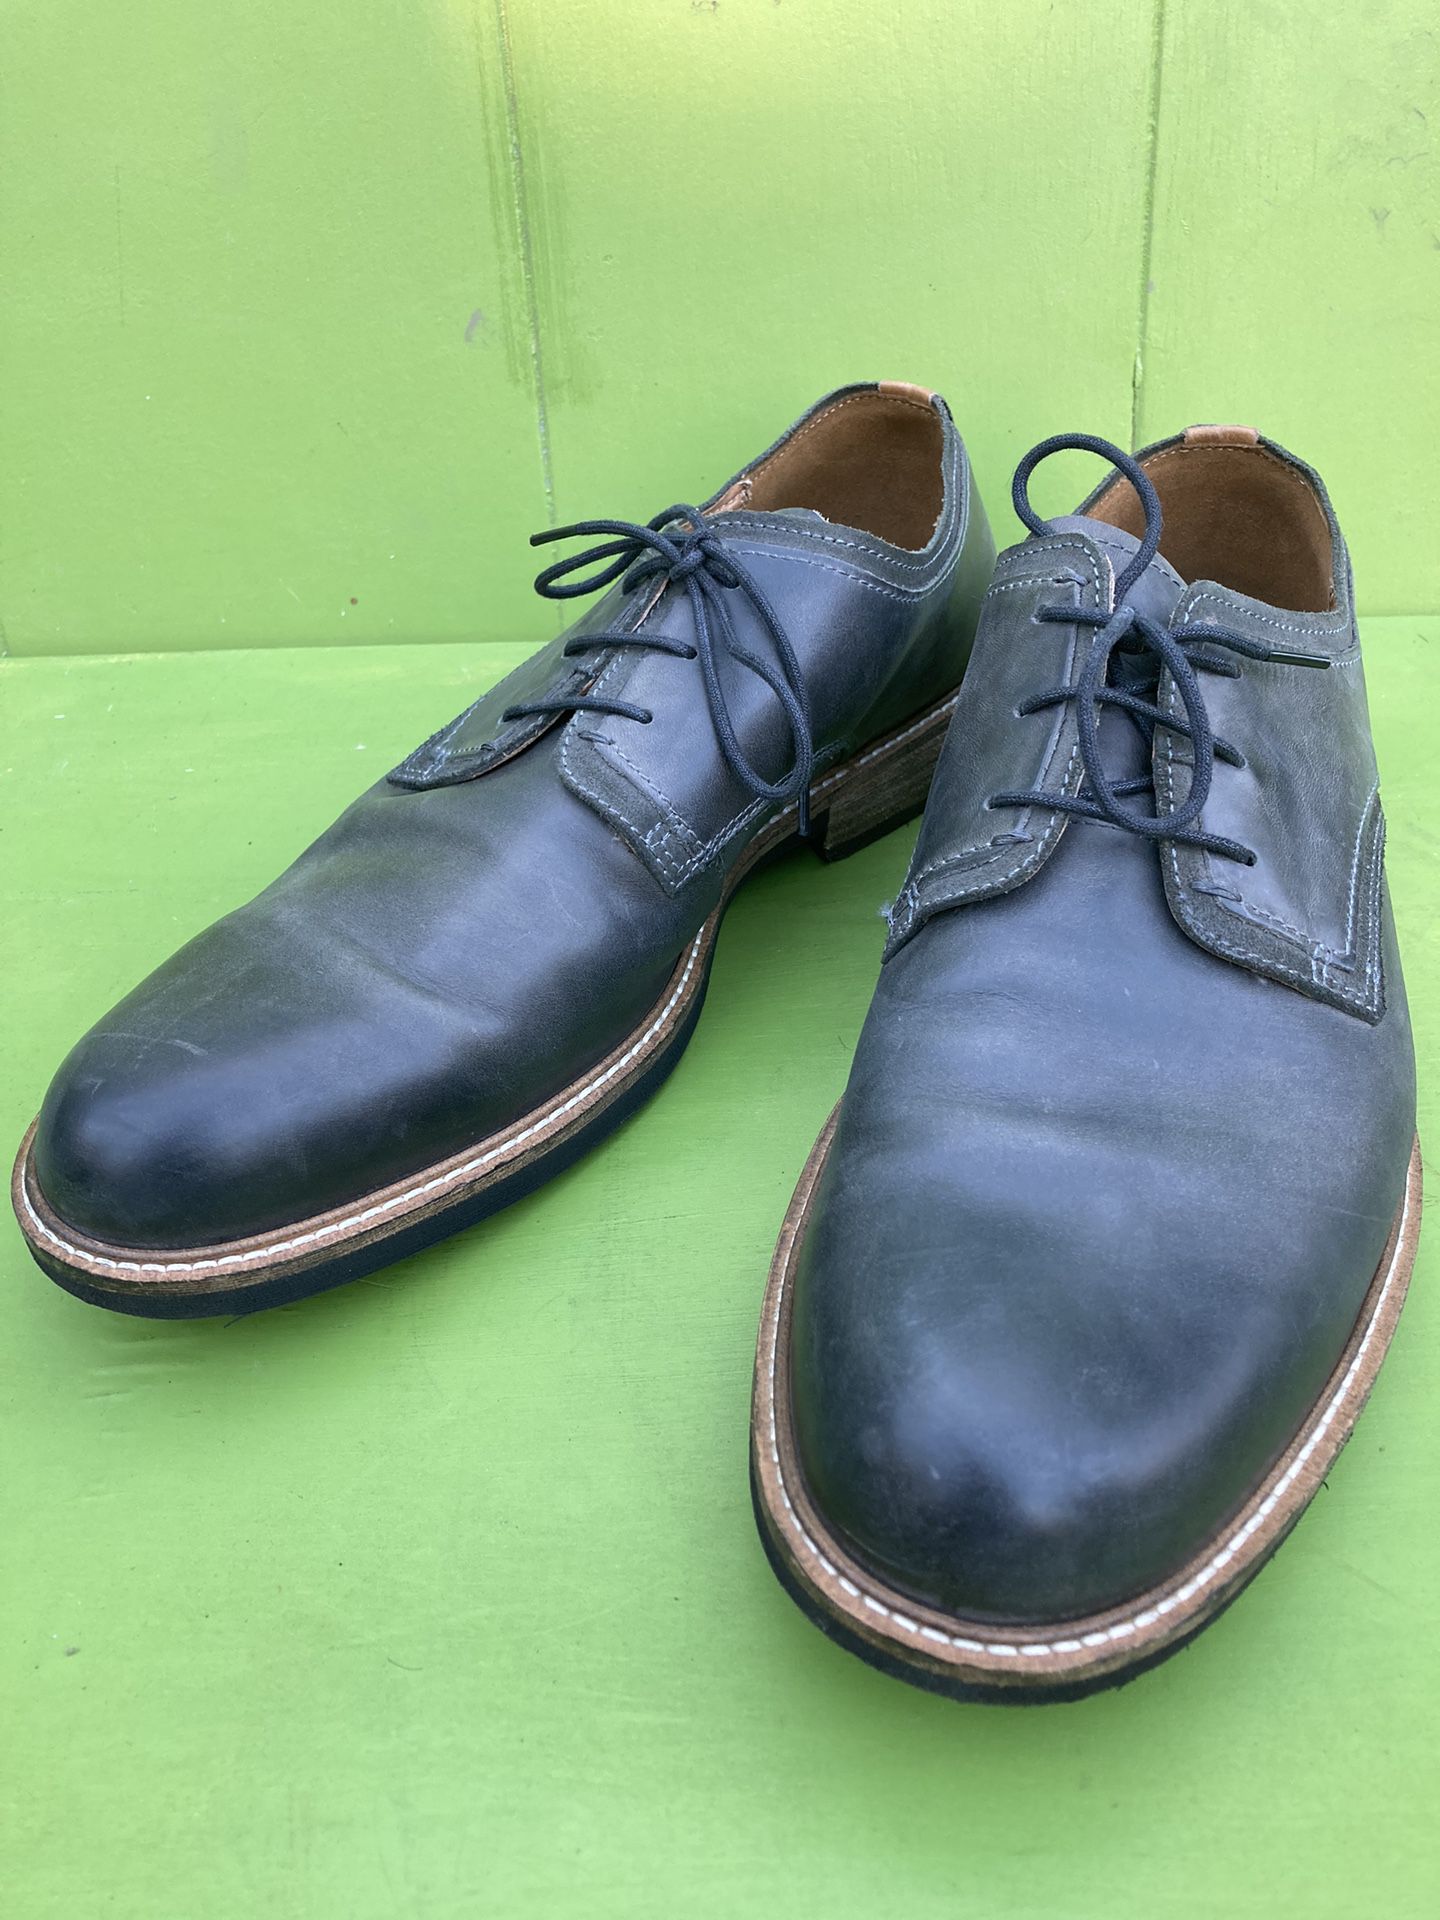 ECCO Oxford Casual Dress Men’s Shoes Size 13 US